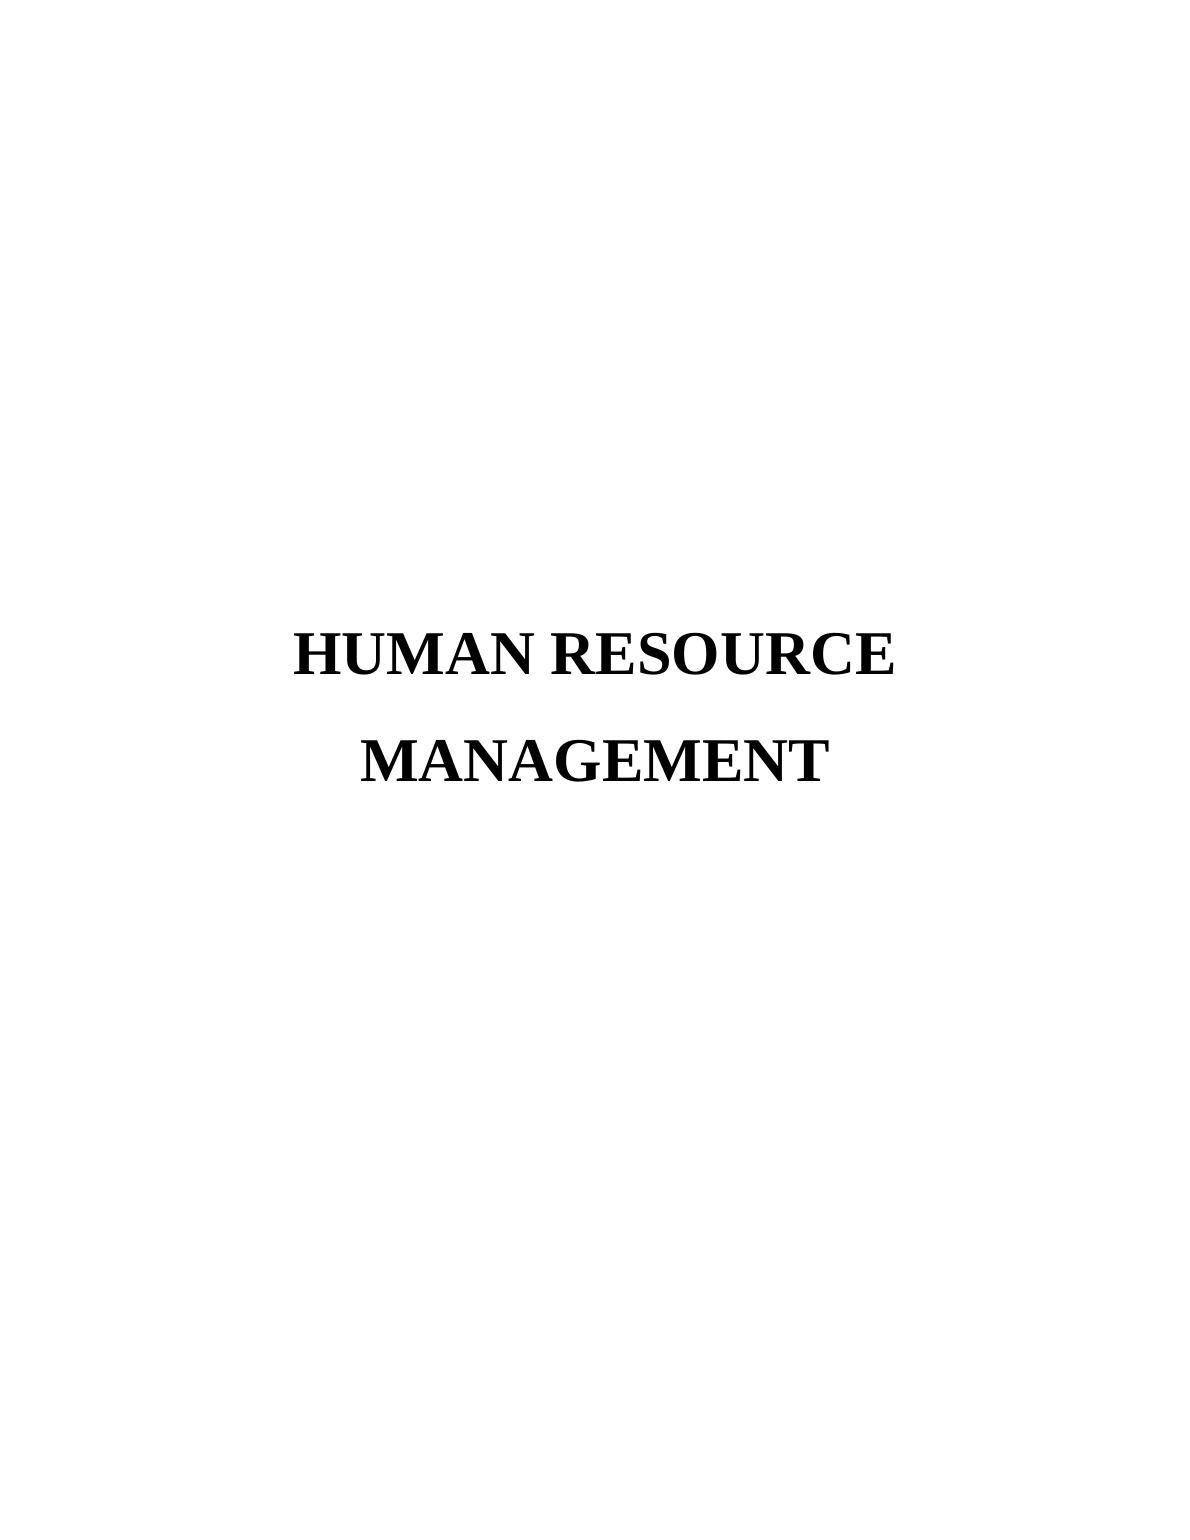 Human Resource Management in Organisational Purposes_1